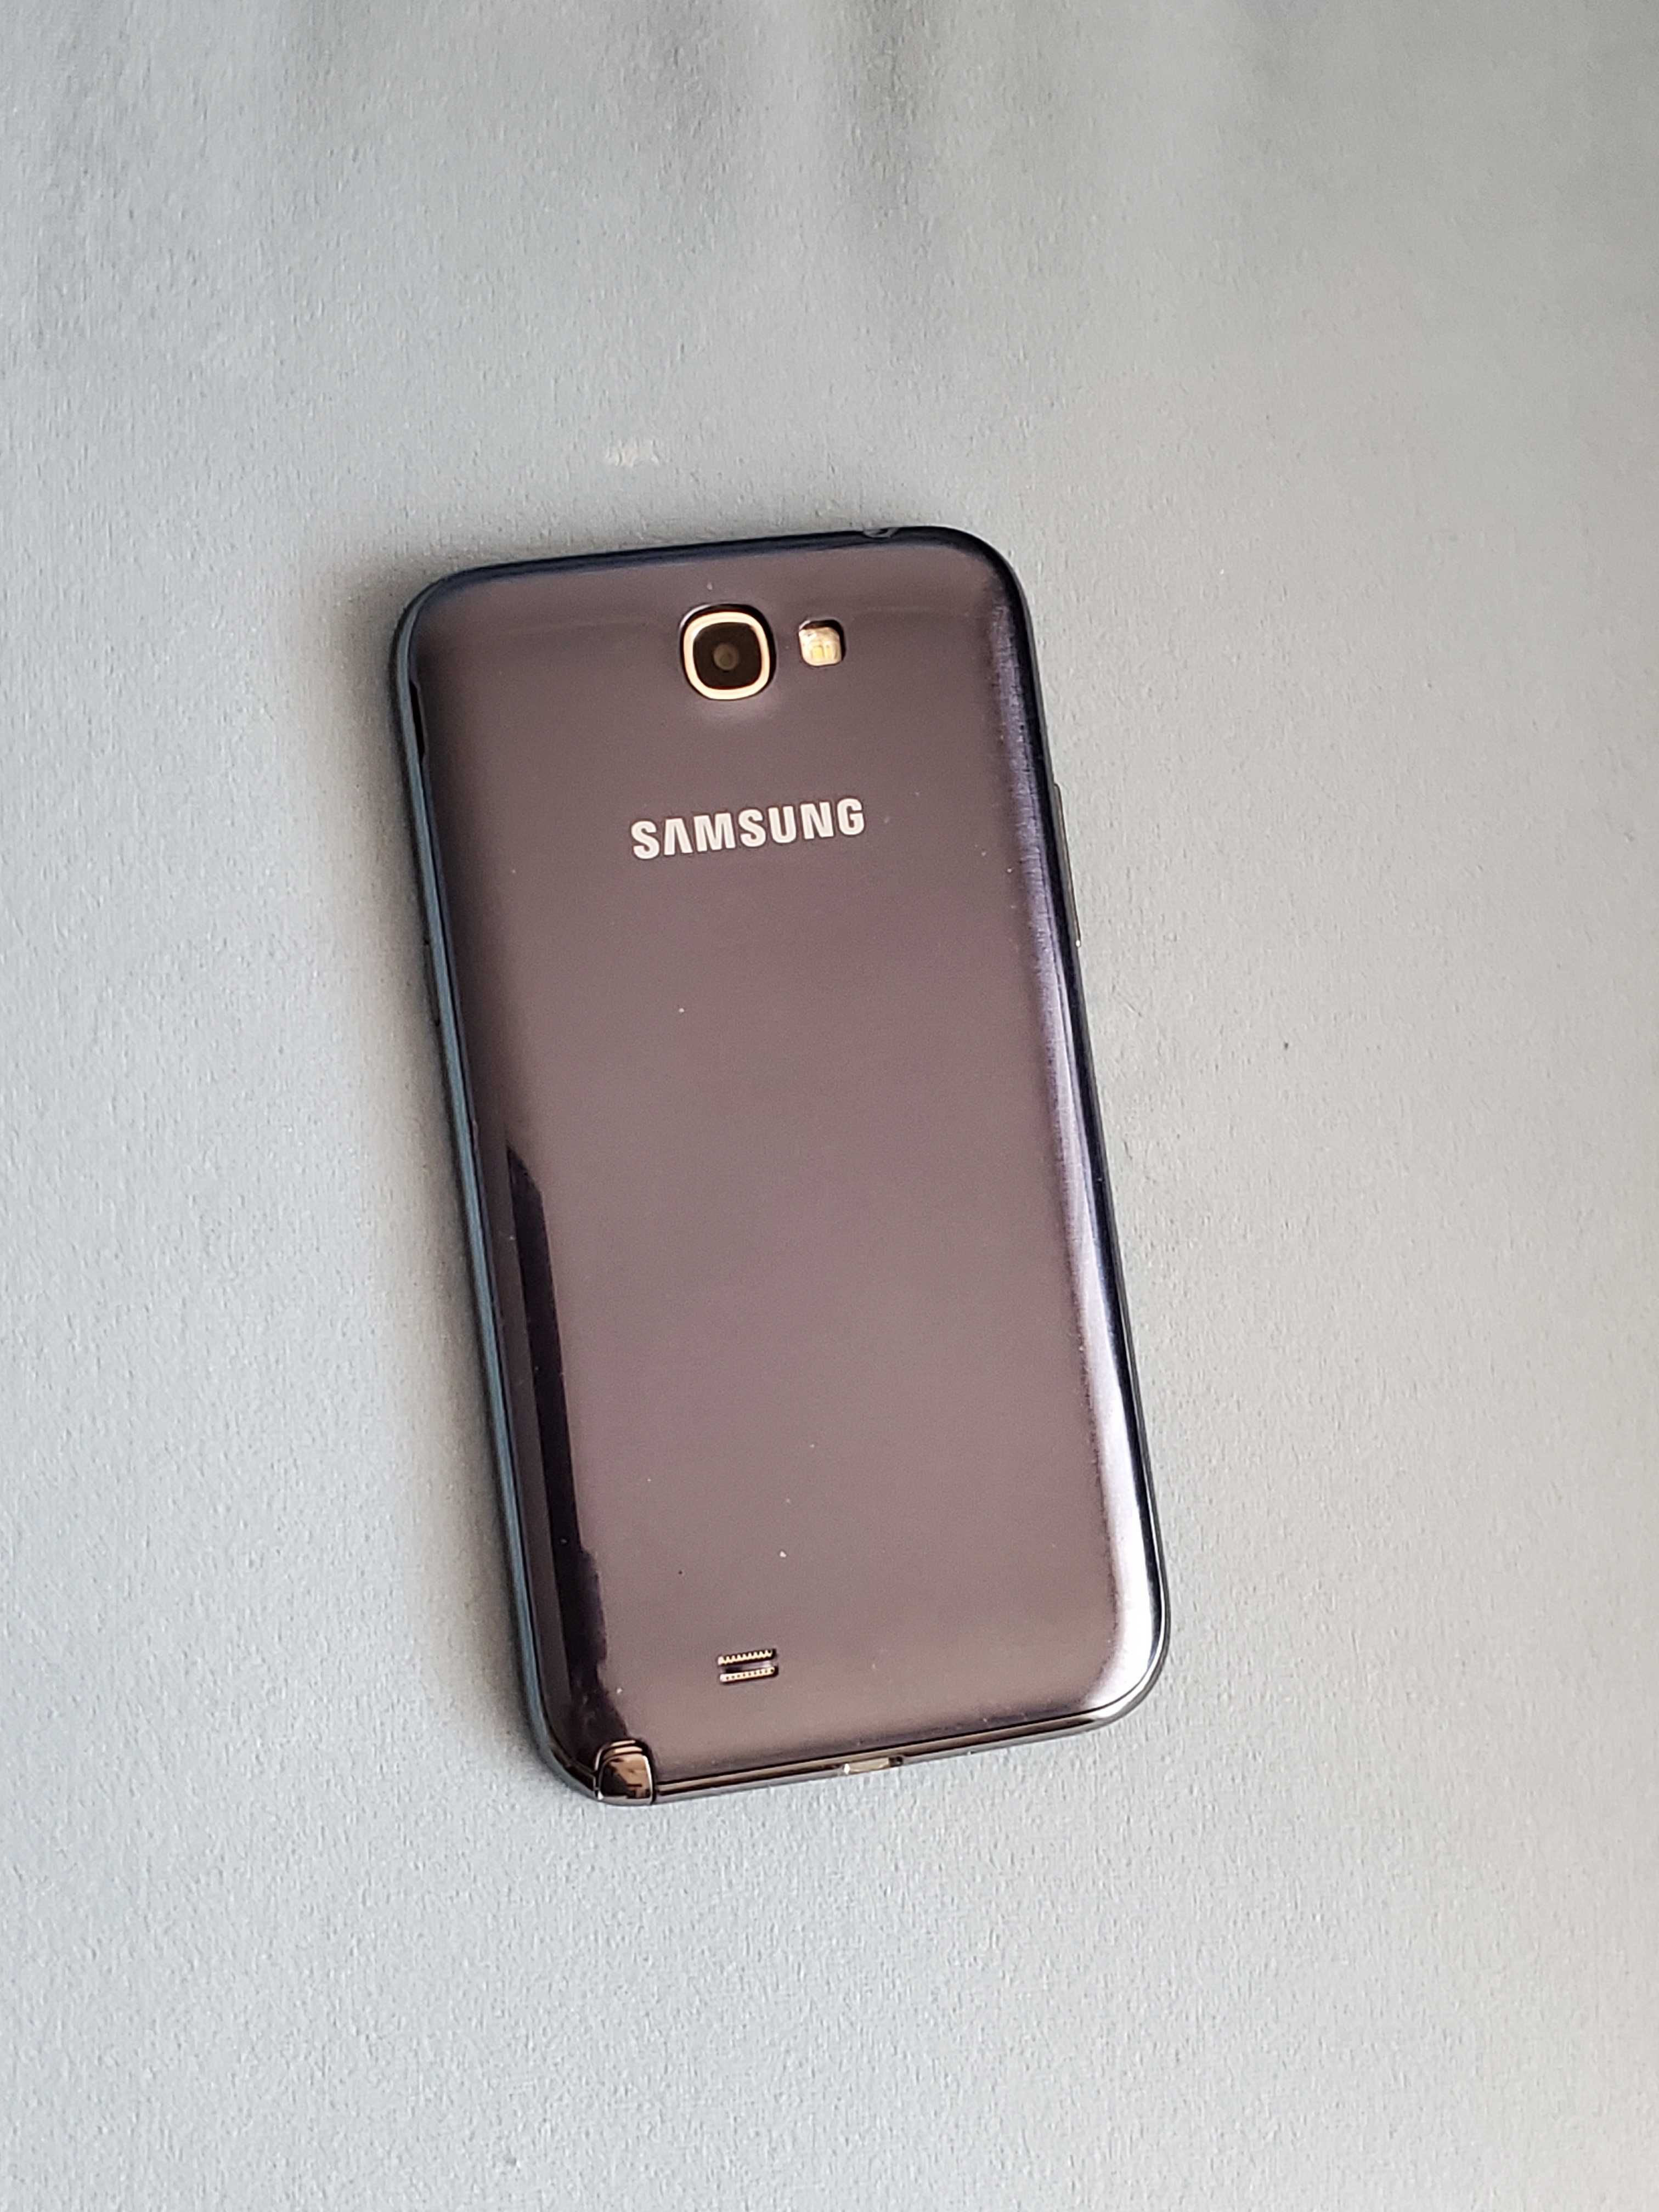 Samsung Galaxy Note II GT-N7100 на запчастини чи у користування